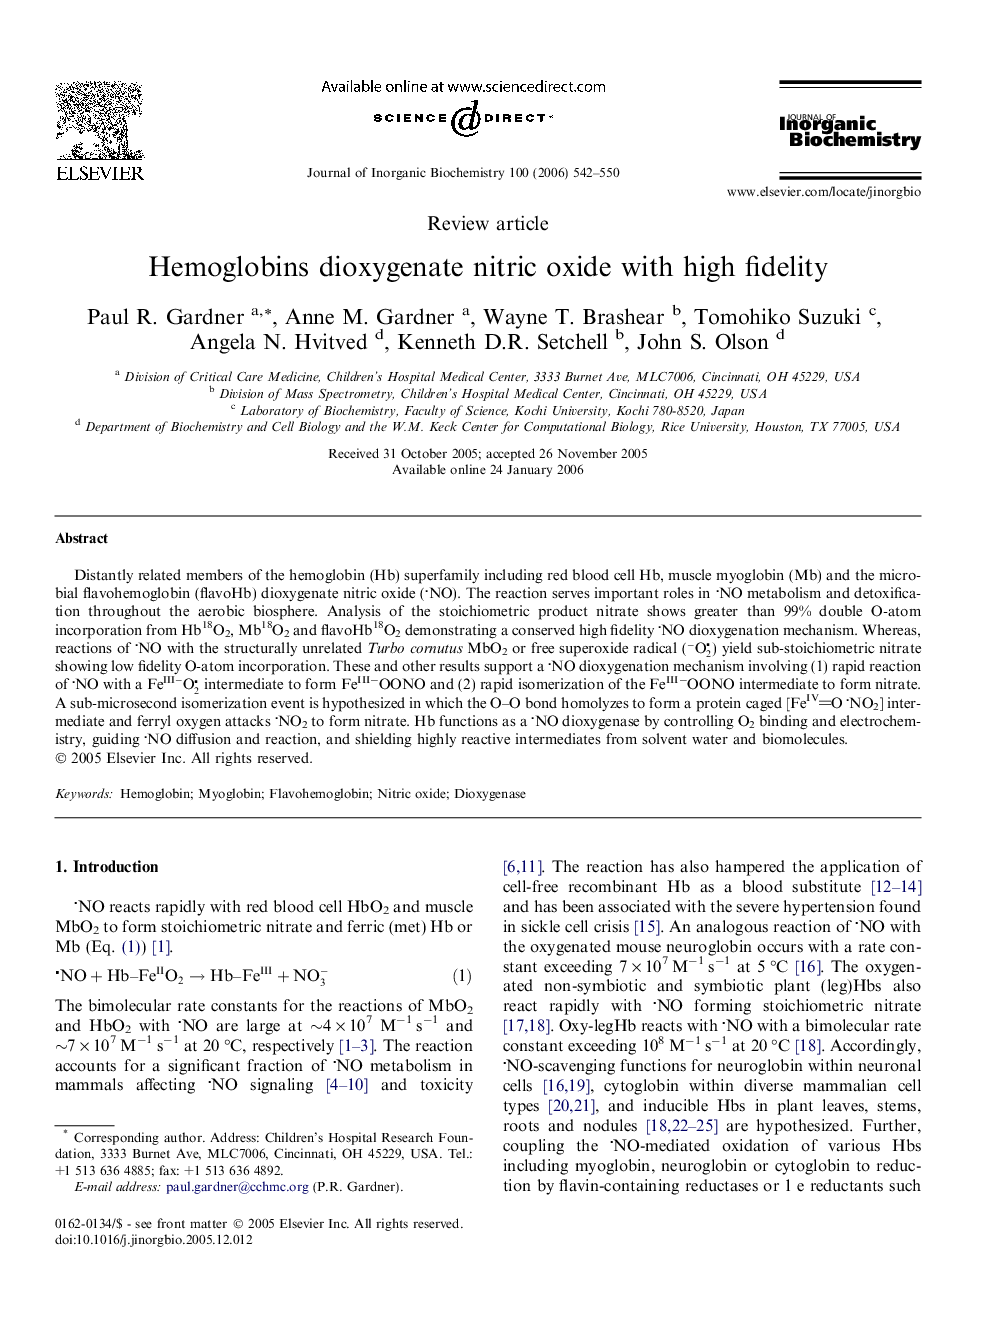 Hemoglobins dioxygenate nitric oxide with high fidelity